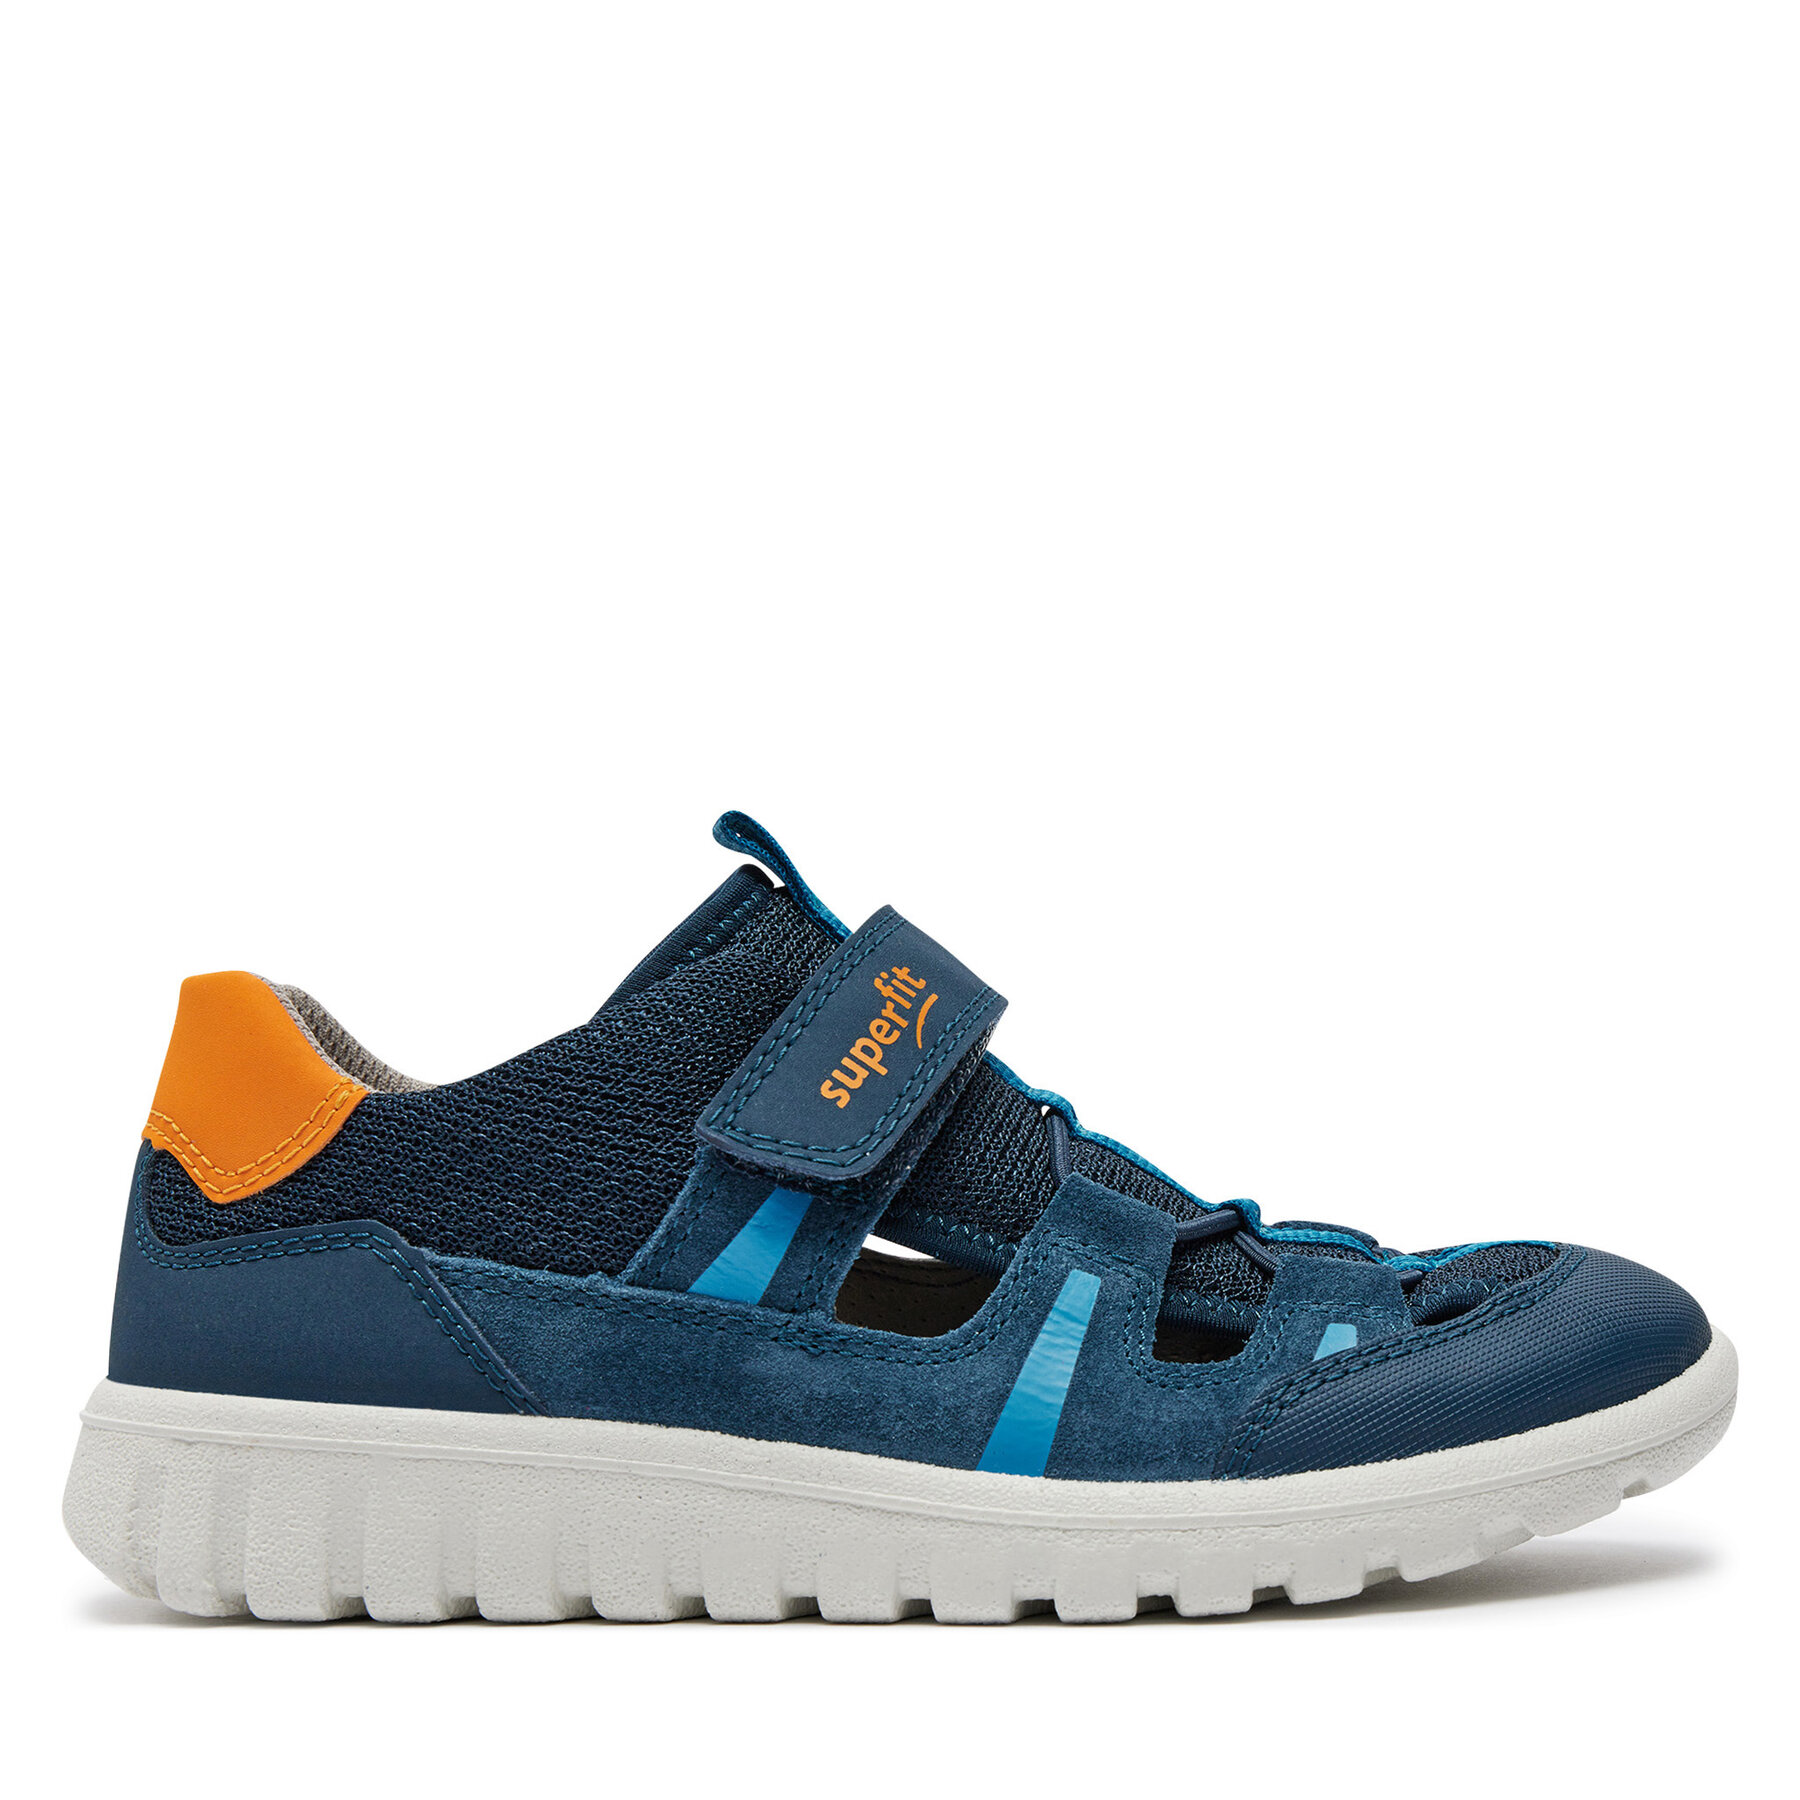 Cipele Superfit 1-006181-8000 D Blue/Orange